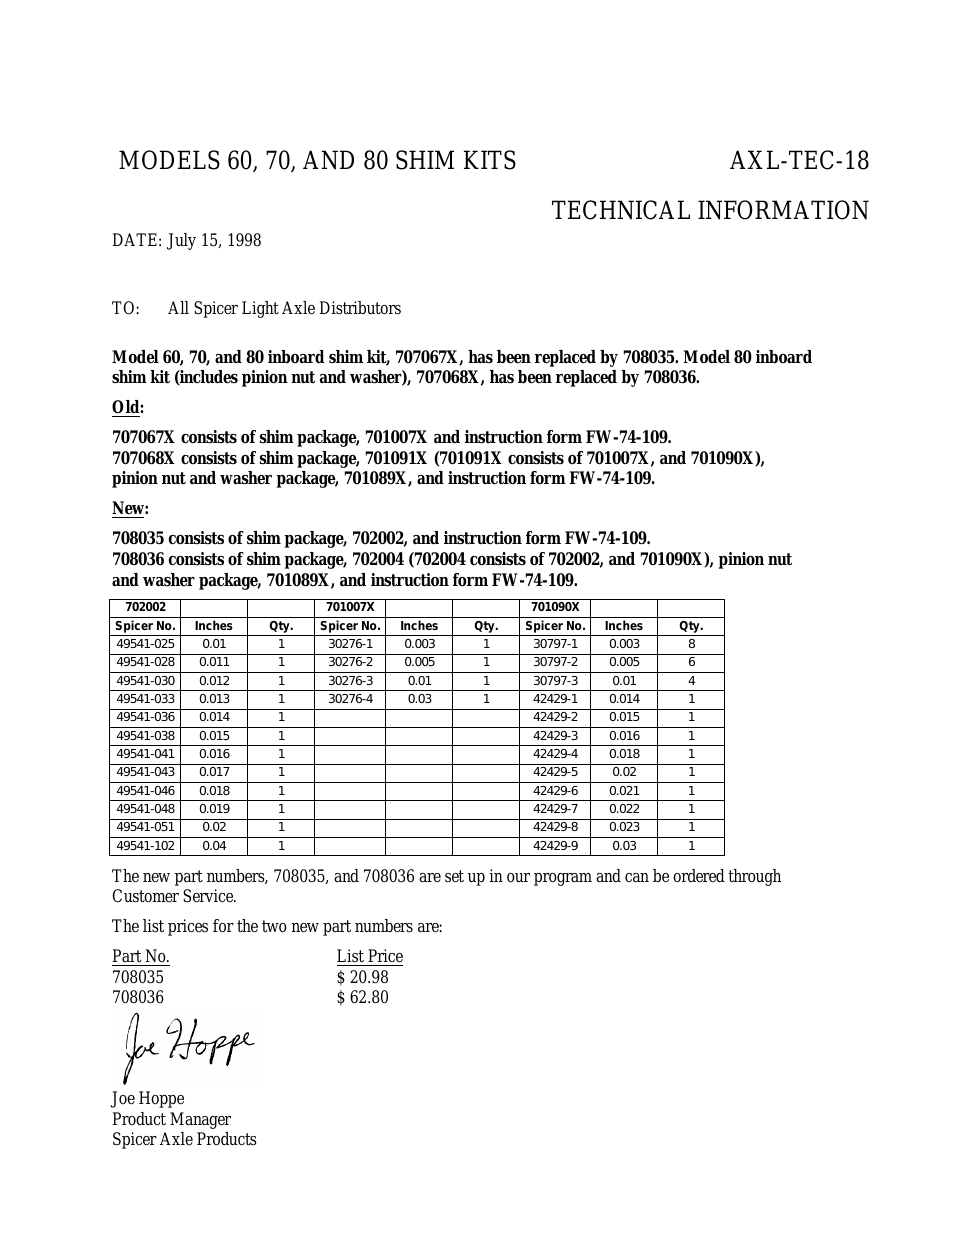 80 Shim Kits Technical Information